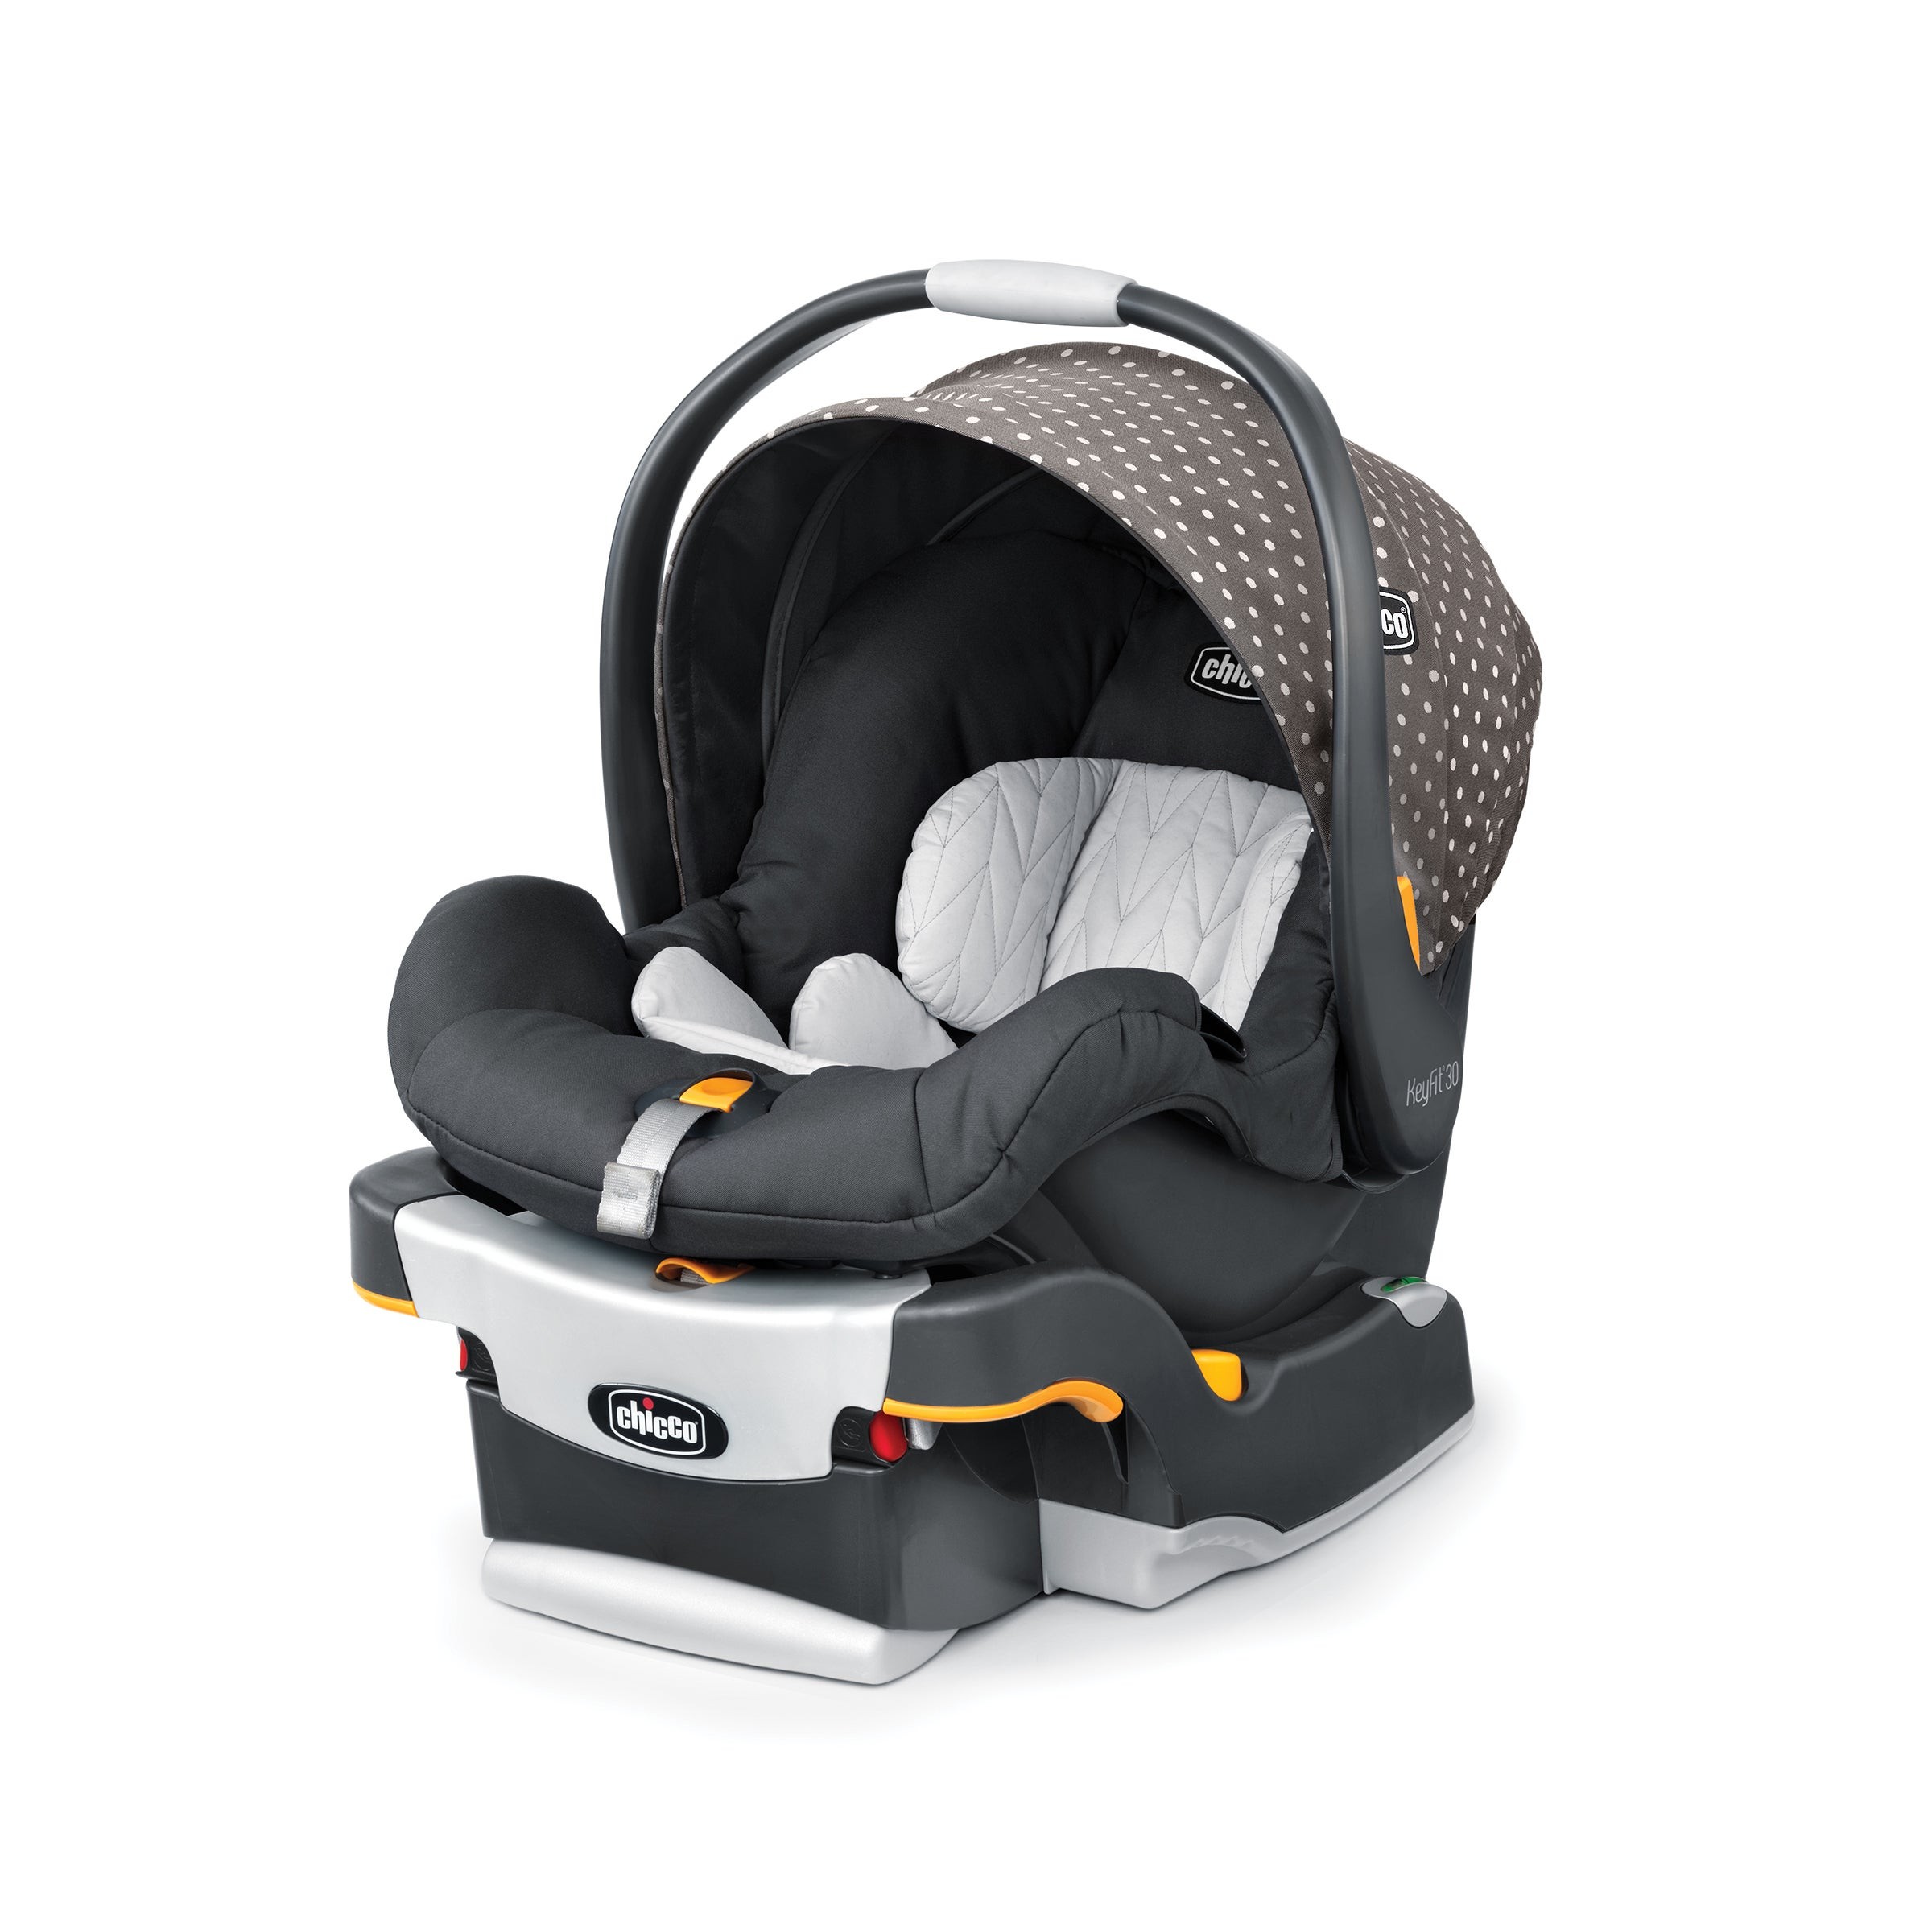 KeyFit 30 Infant Car Seat Calla